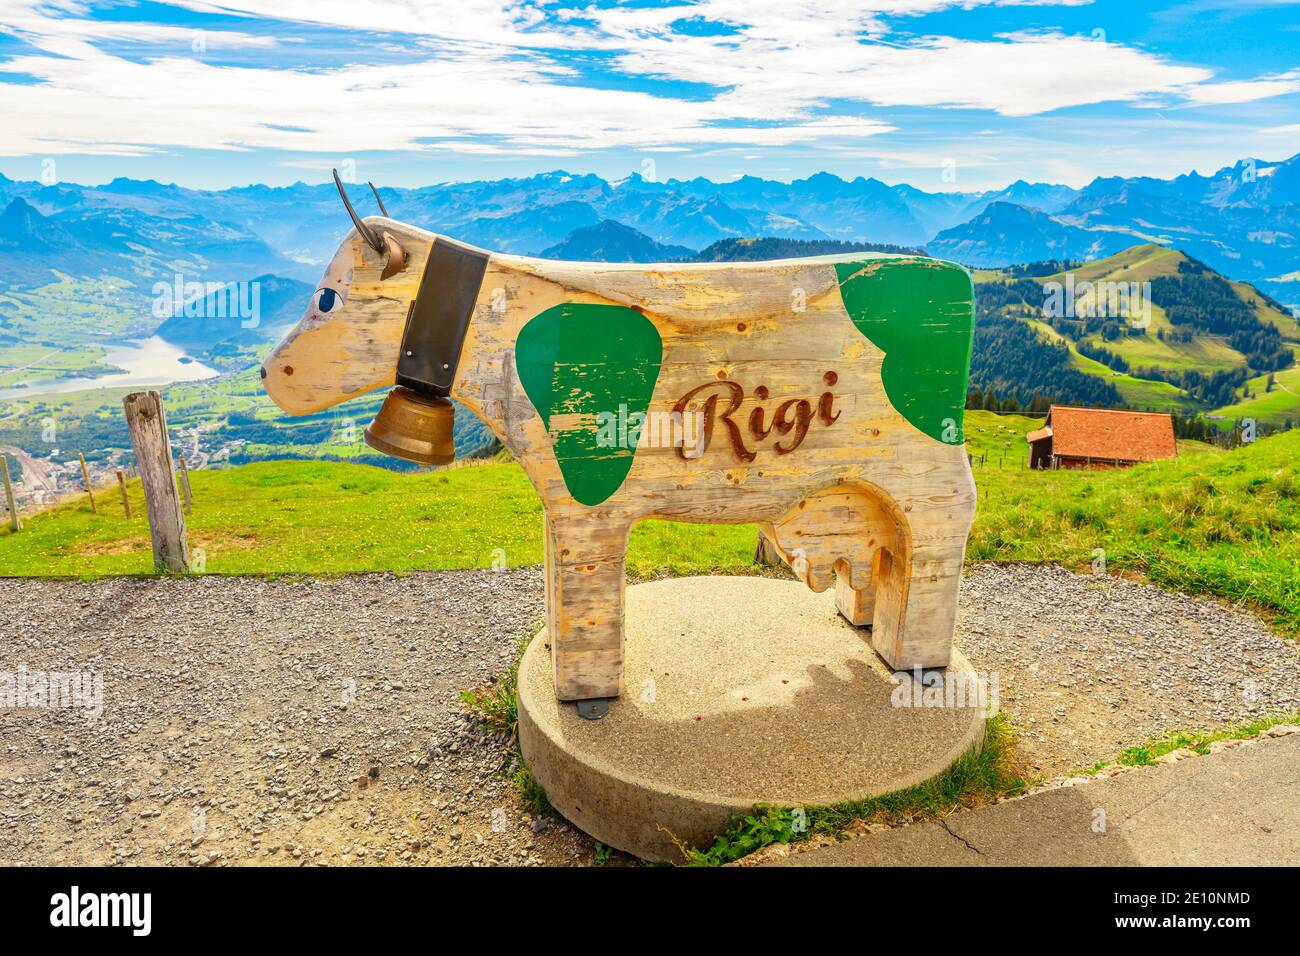 Rigi kulm, Switzerland - Aug 25, 2020: Wooden sculpture of cow on top of Mount Rigi, the highest peak around Lake Lucerne. Stock Photo